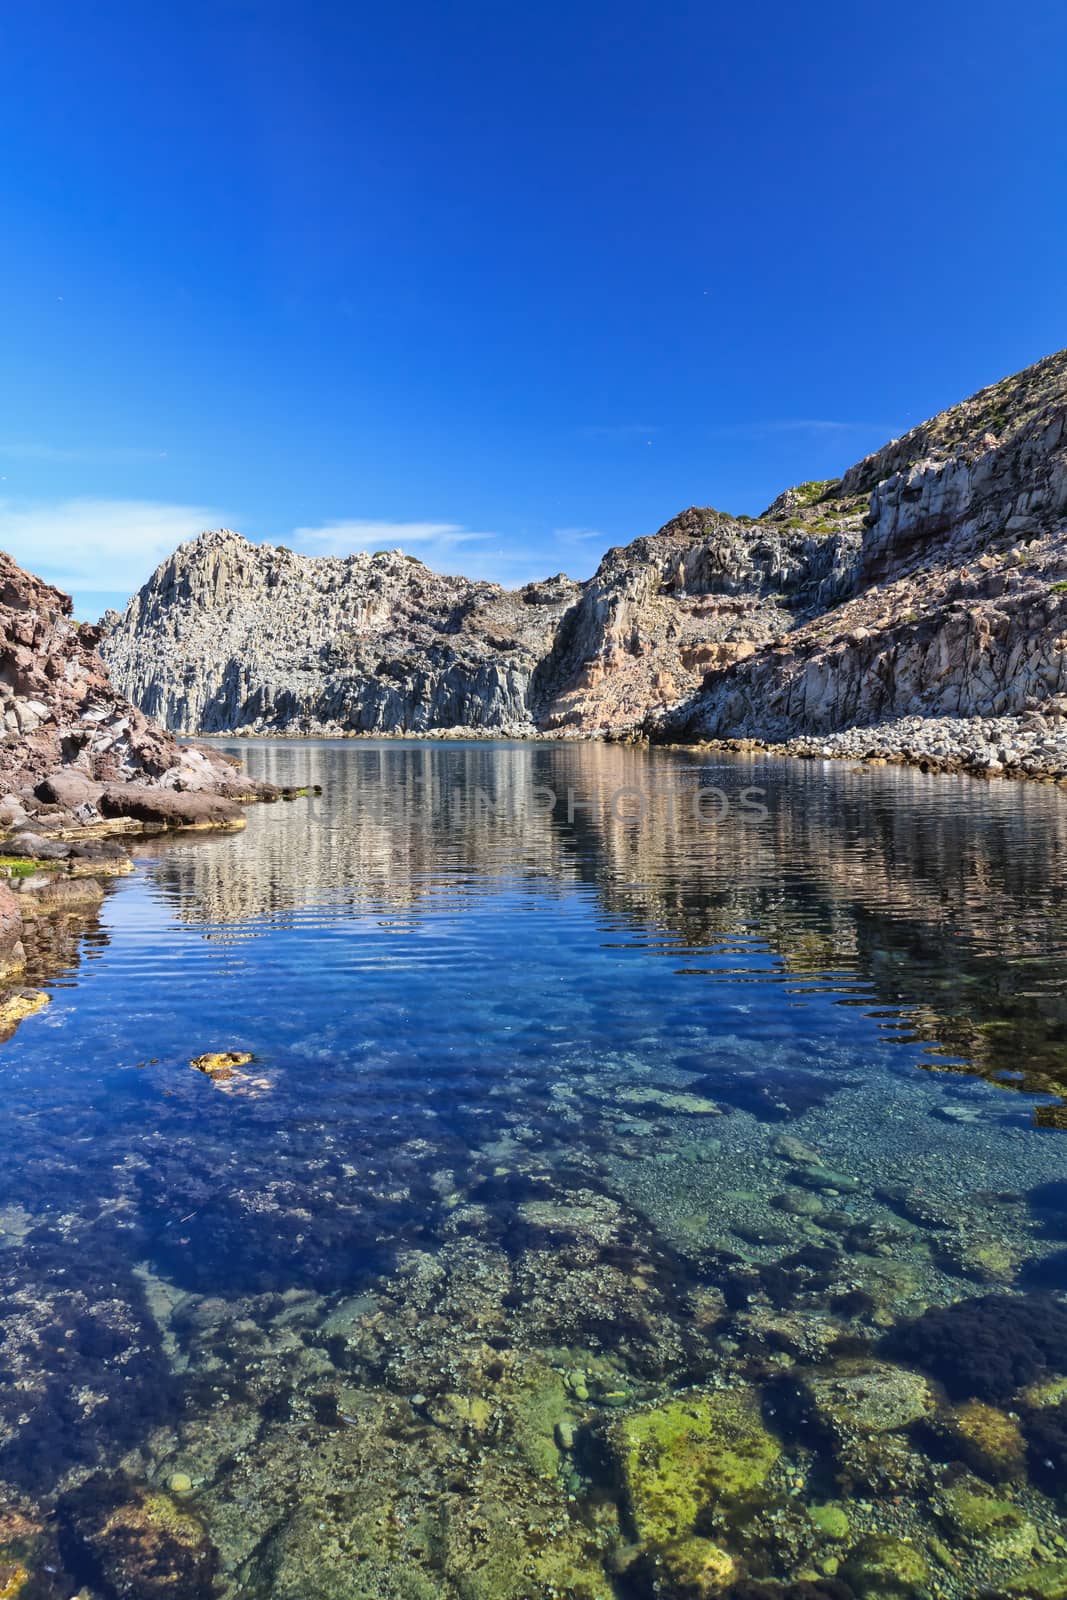 Calafico bay in San Pietro island, Sardinia, Italy